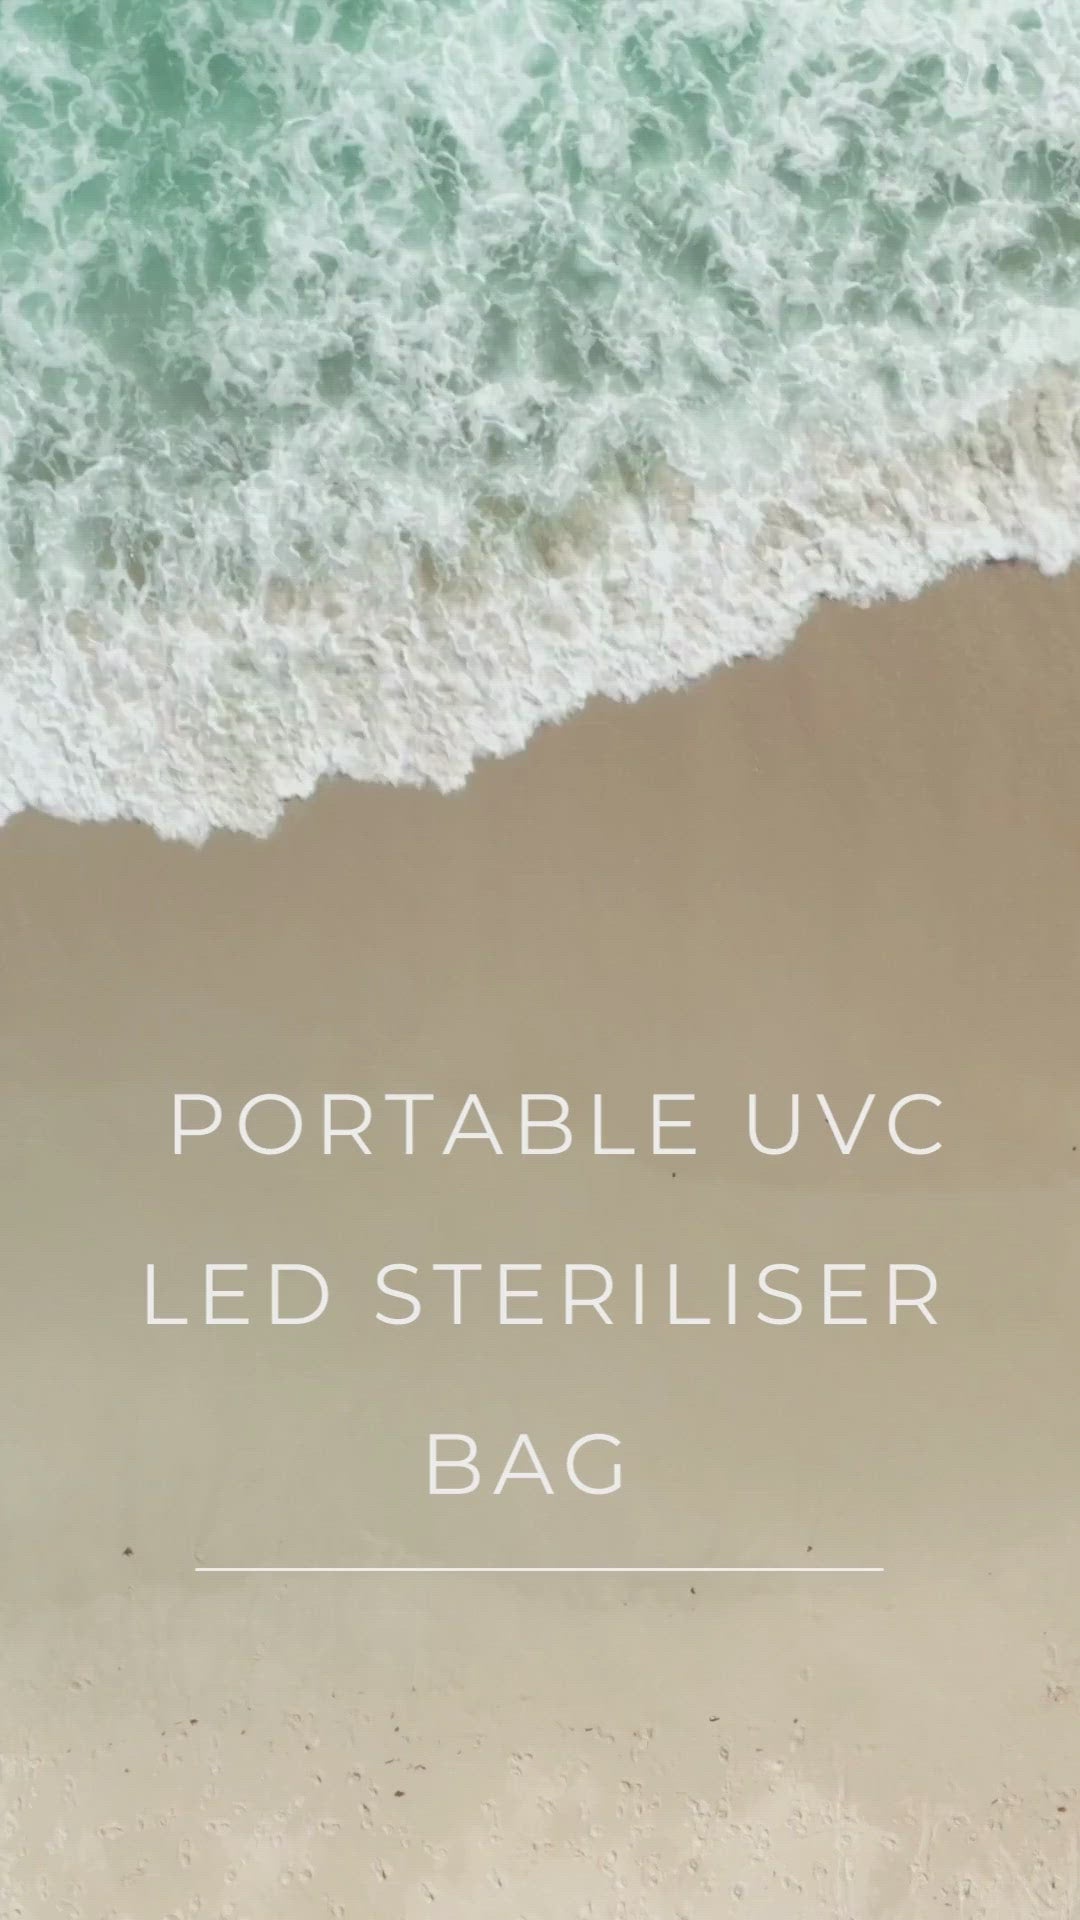 Foldable UVC LED Steriliser Bag